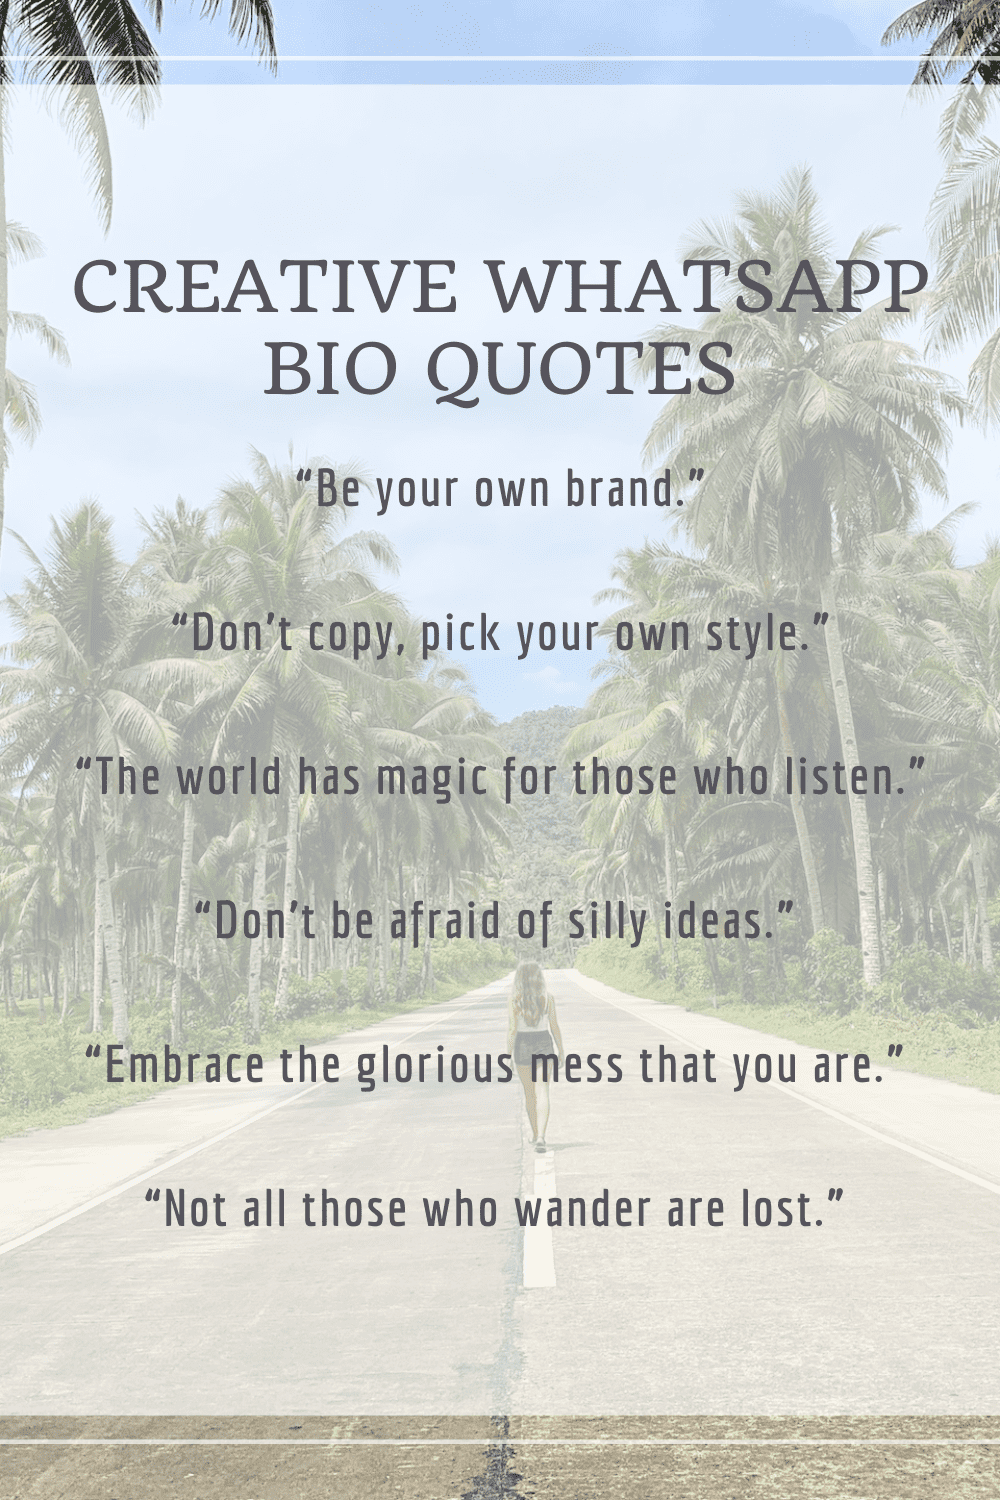 Creative Quotes for WhatsApp Bio